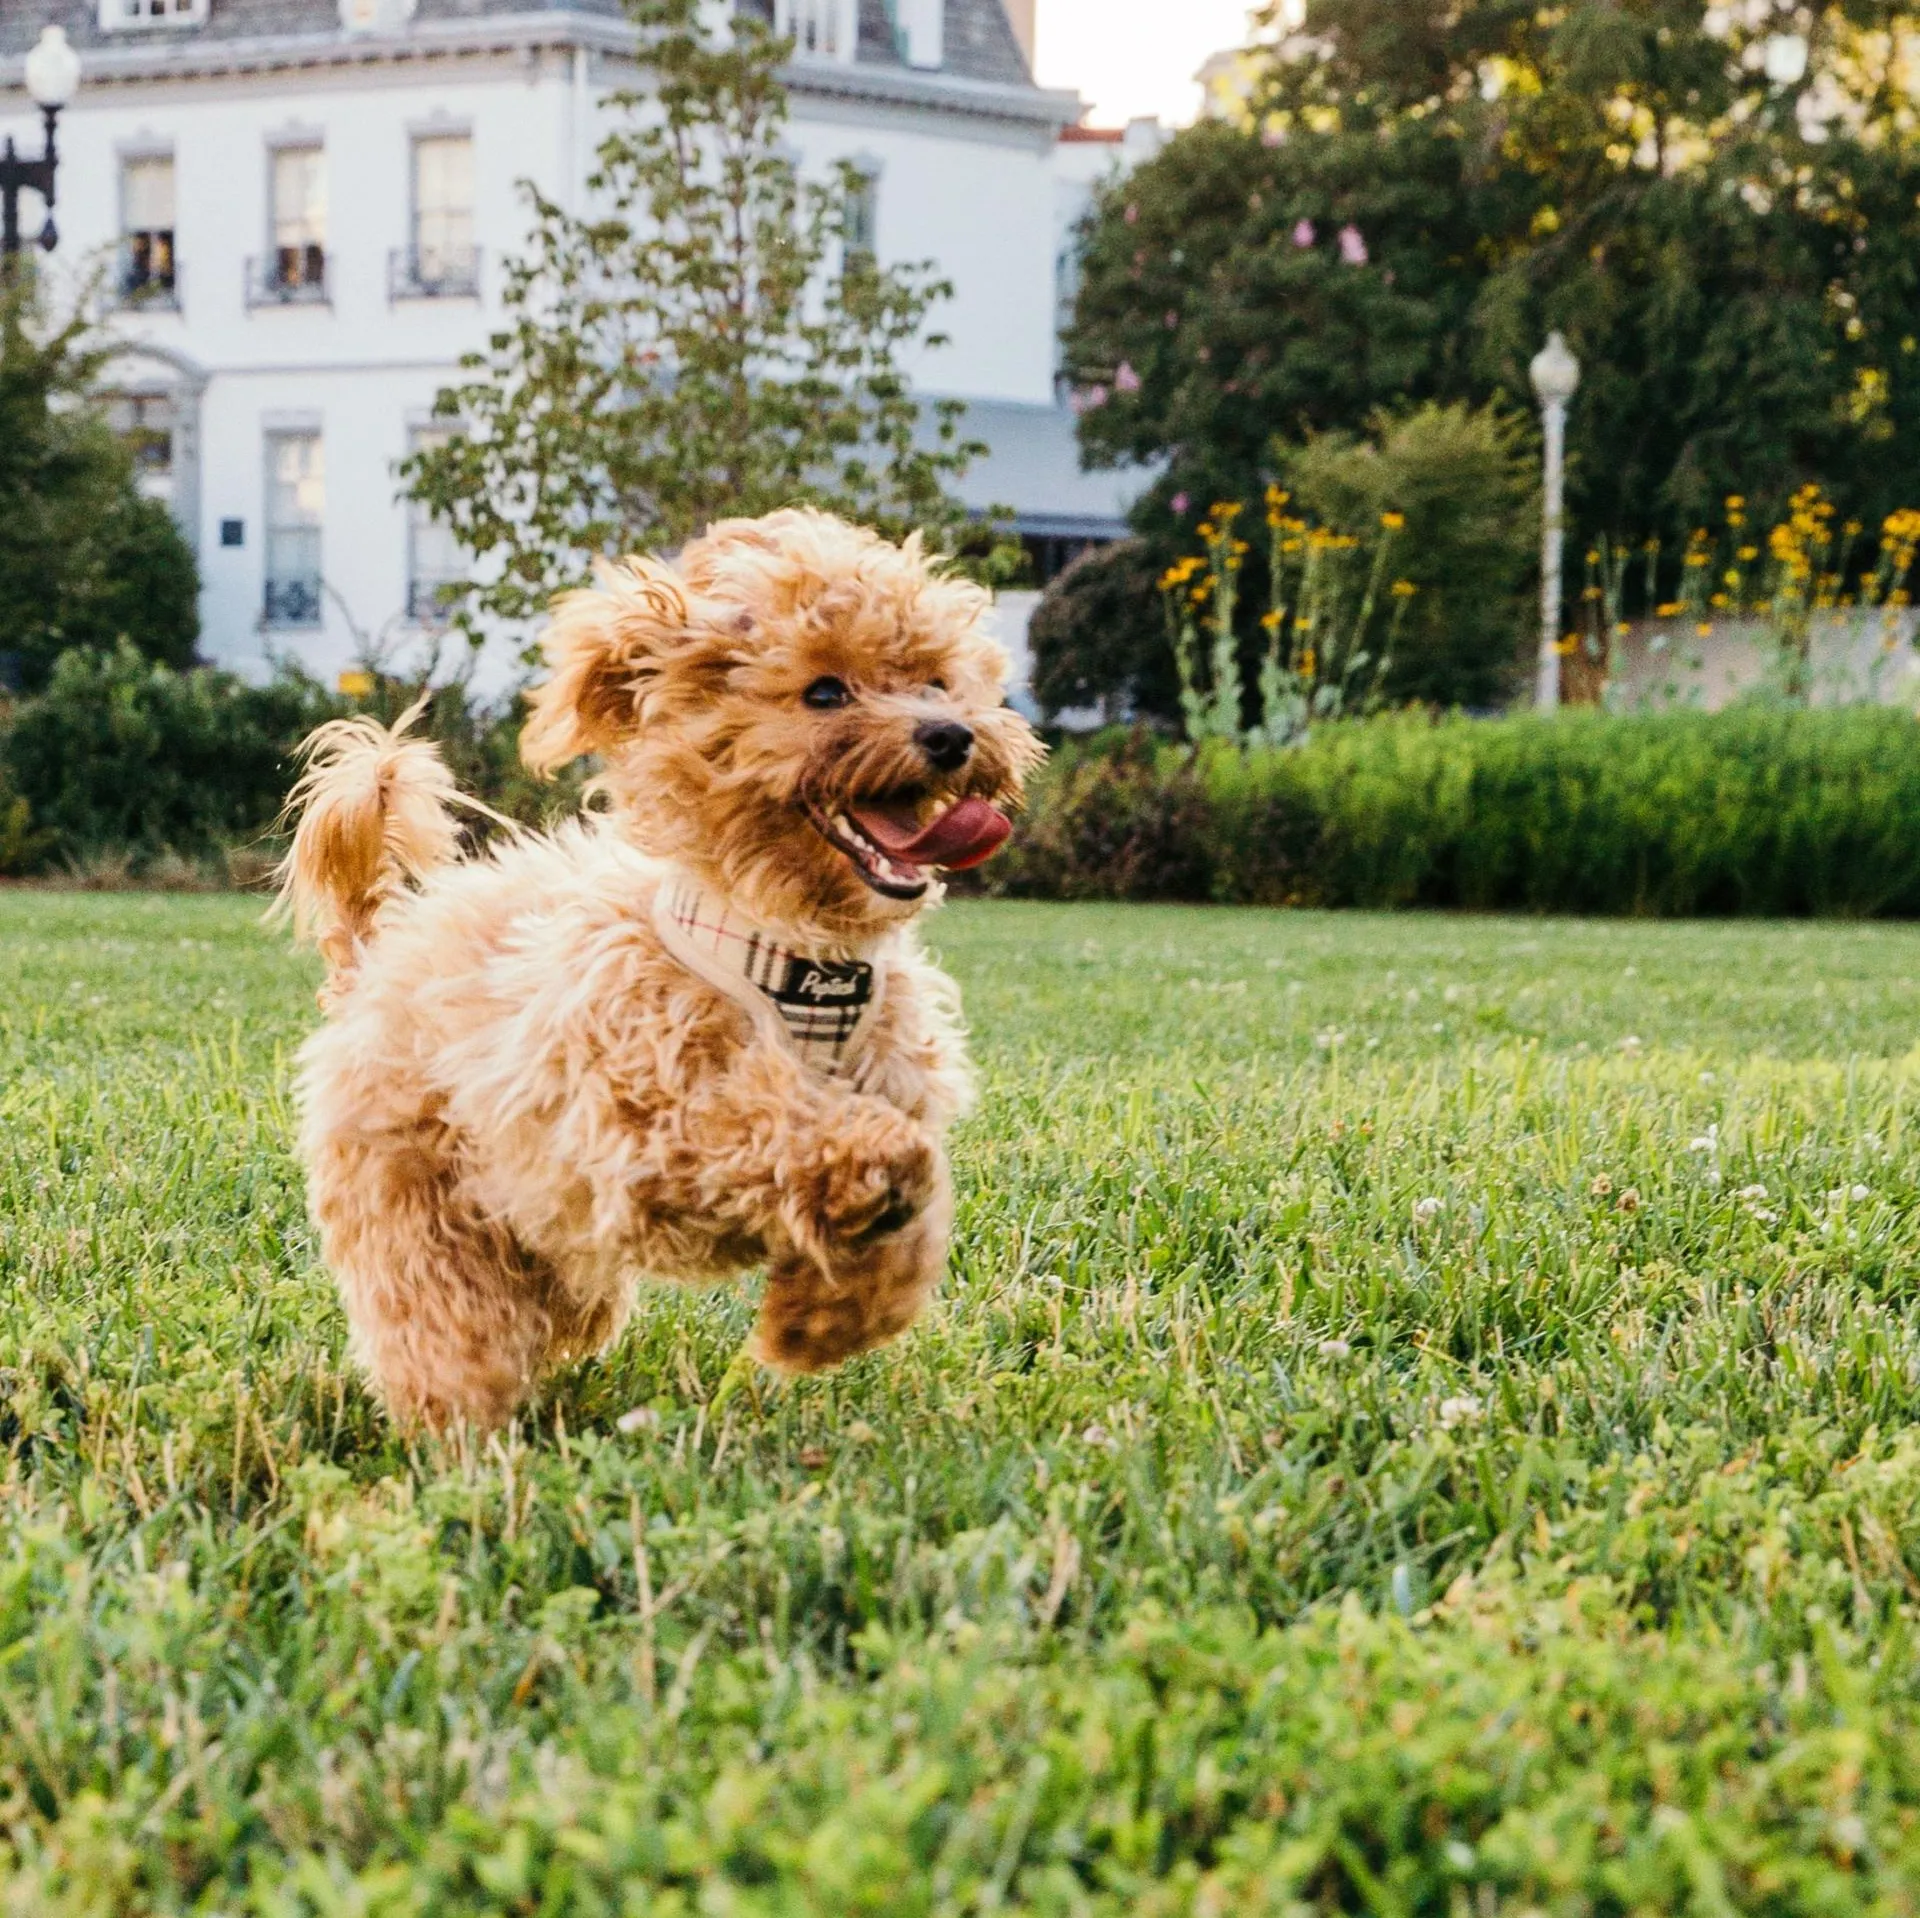 Very happy dog running on lush grass